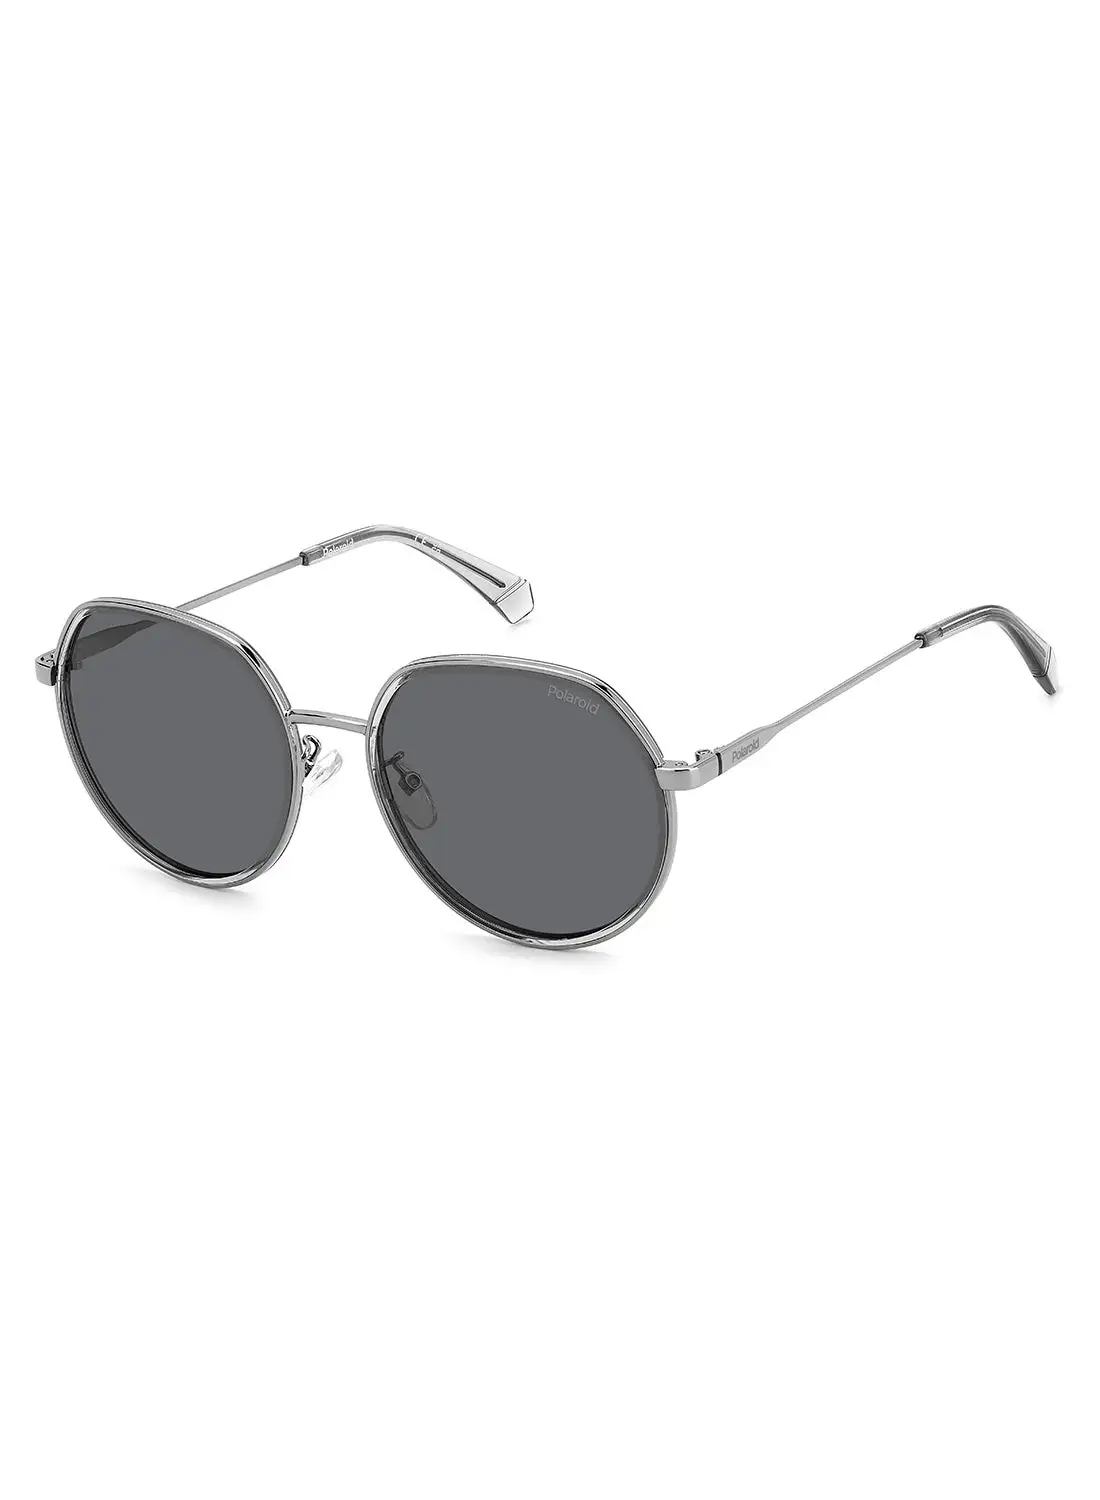 Polaroid Unisex Polarized Oval Sunglasses - Pld 4160/G/S/X Grey Millimeter - Lens Size: 55 Mm